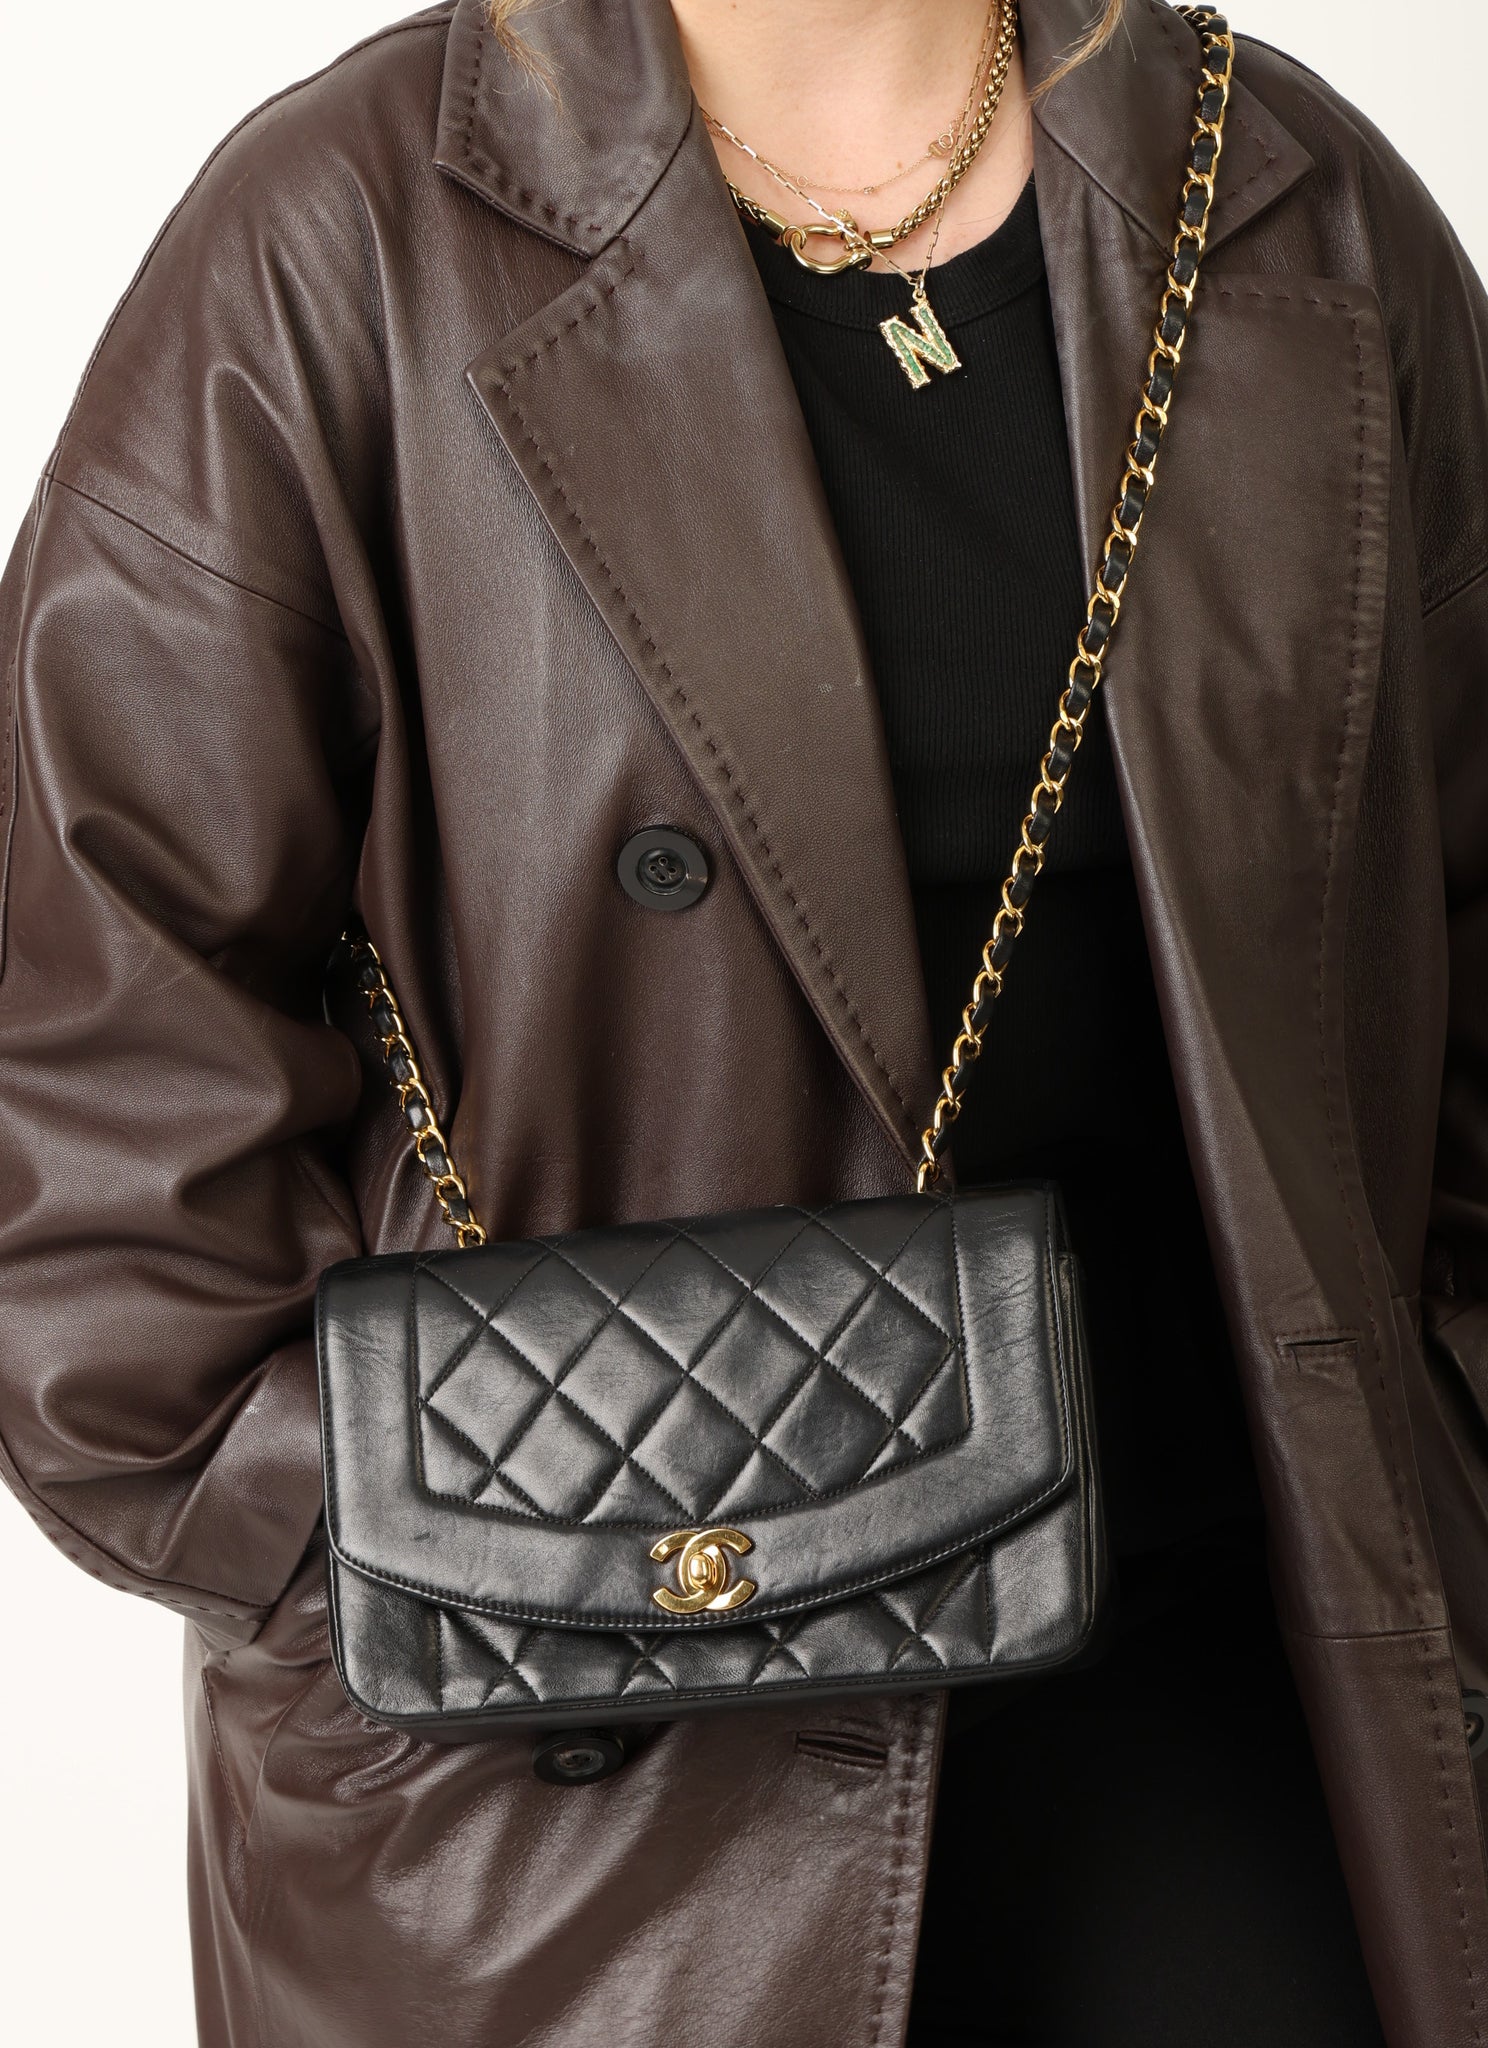 Chanel 1991 Lambskin Diana Flap Bag